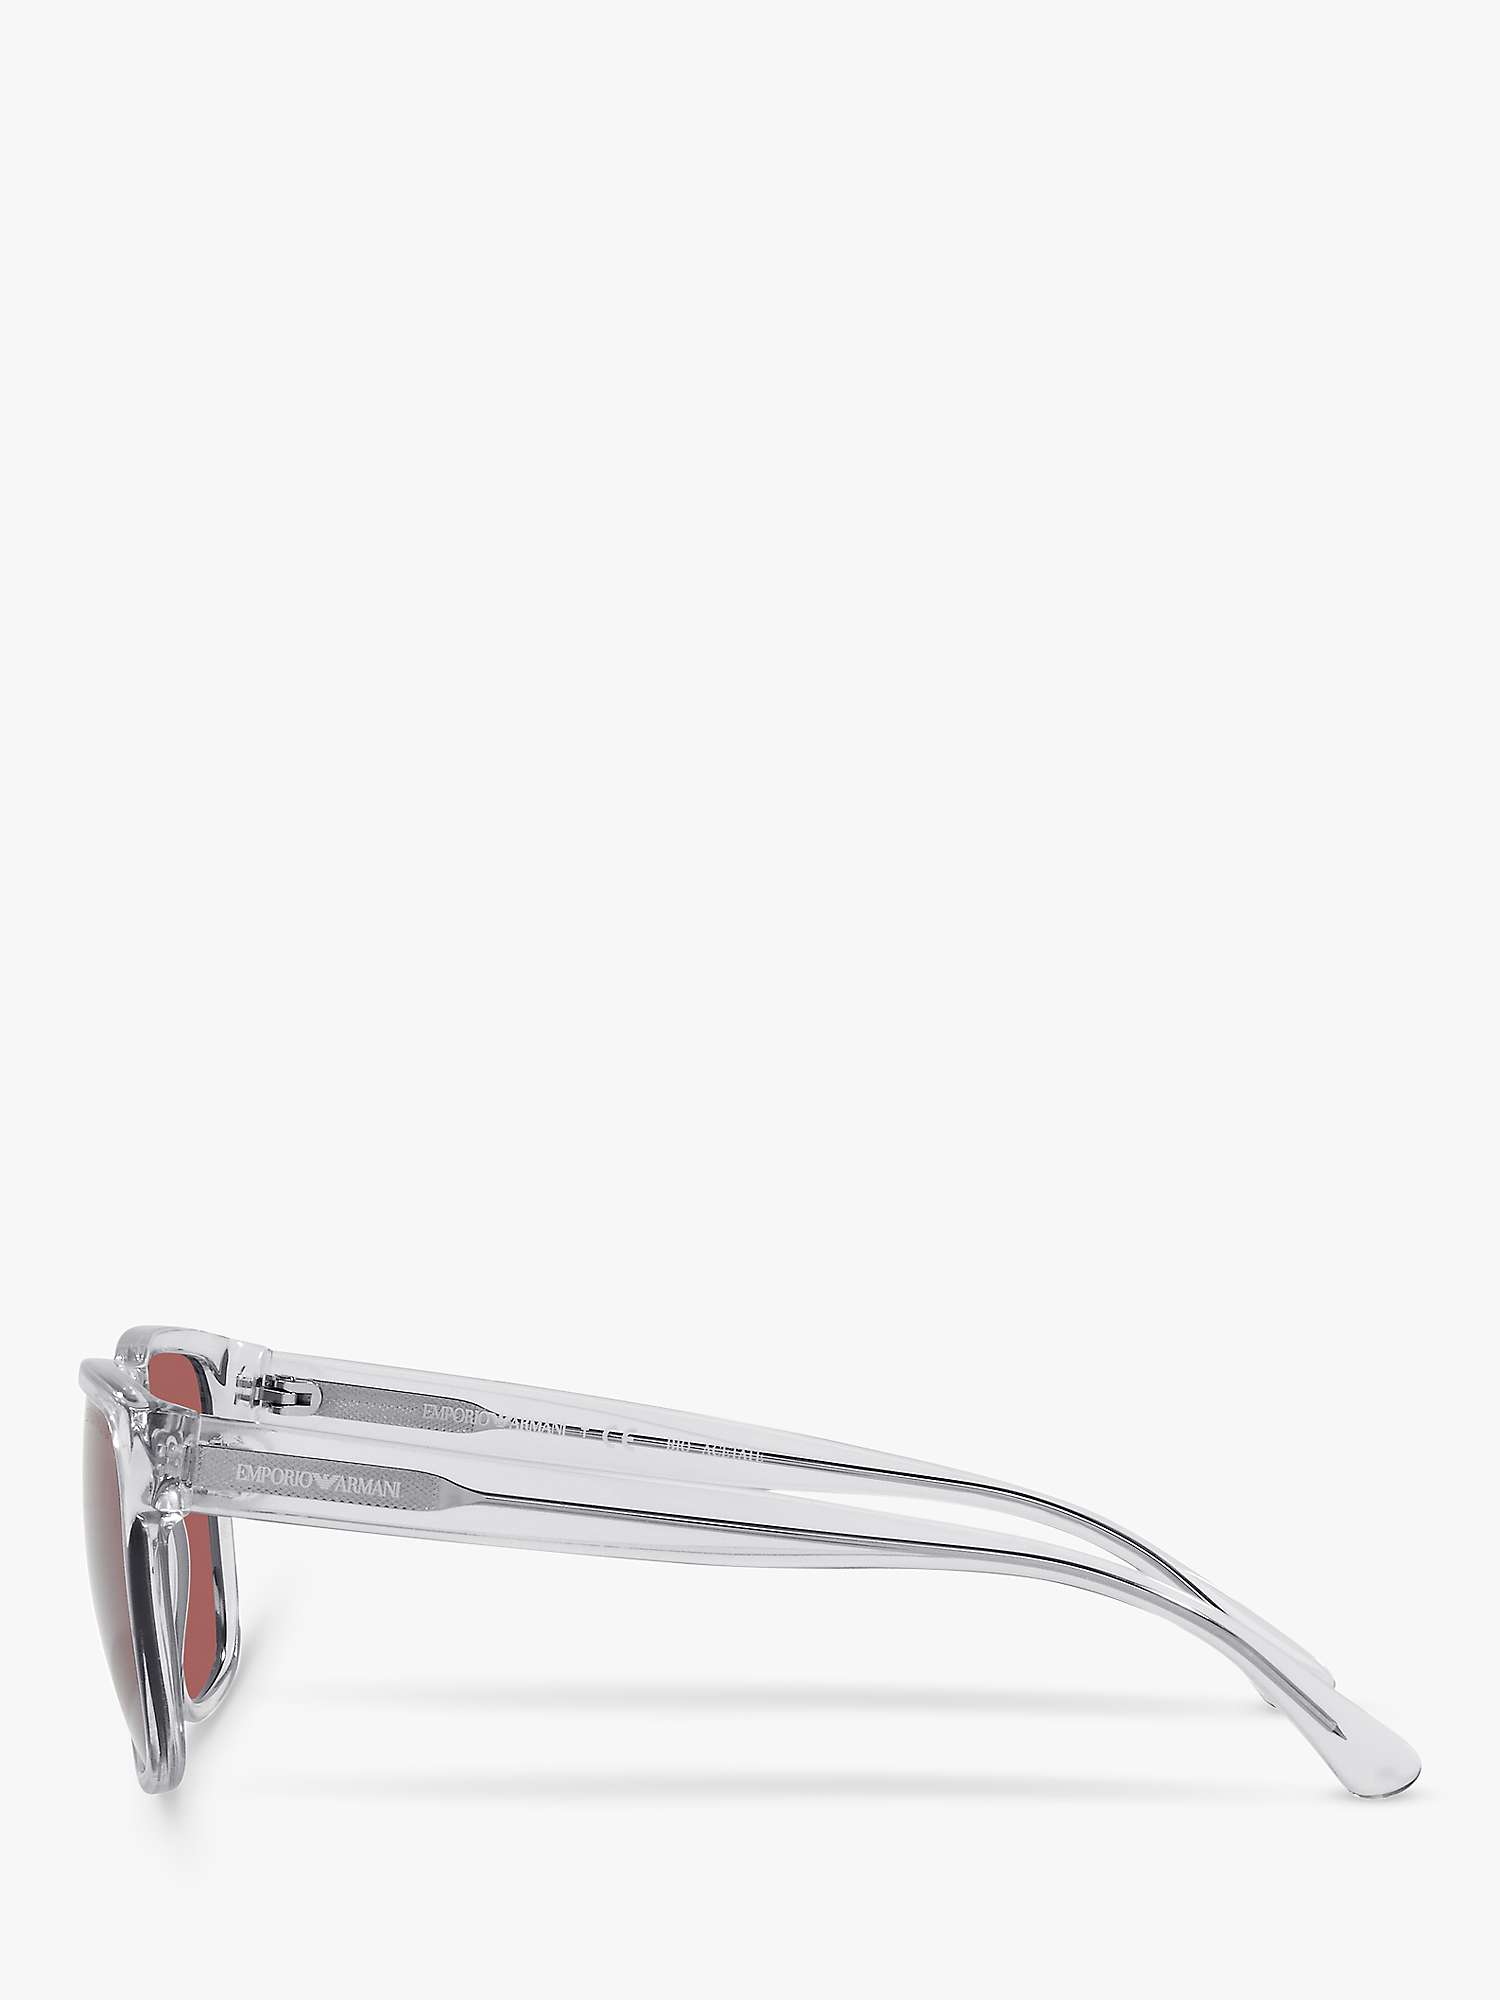 Buy Emporio Armani EA4163 Men's Square Sunglasses, Clear/Pink Online at johnlewis.com